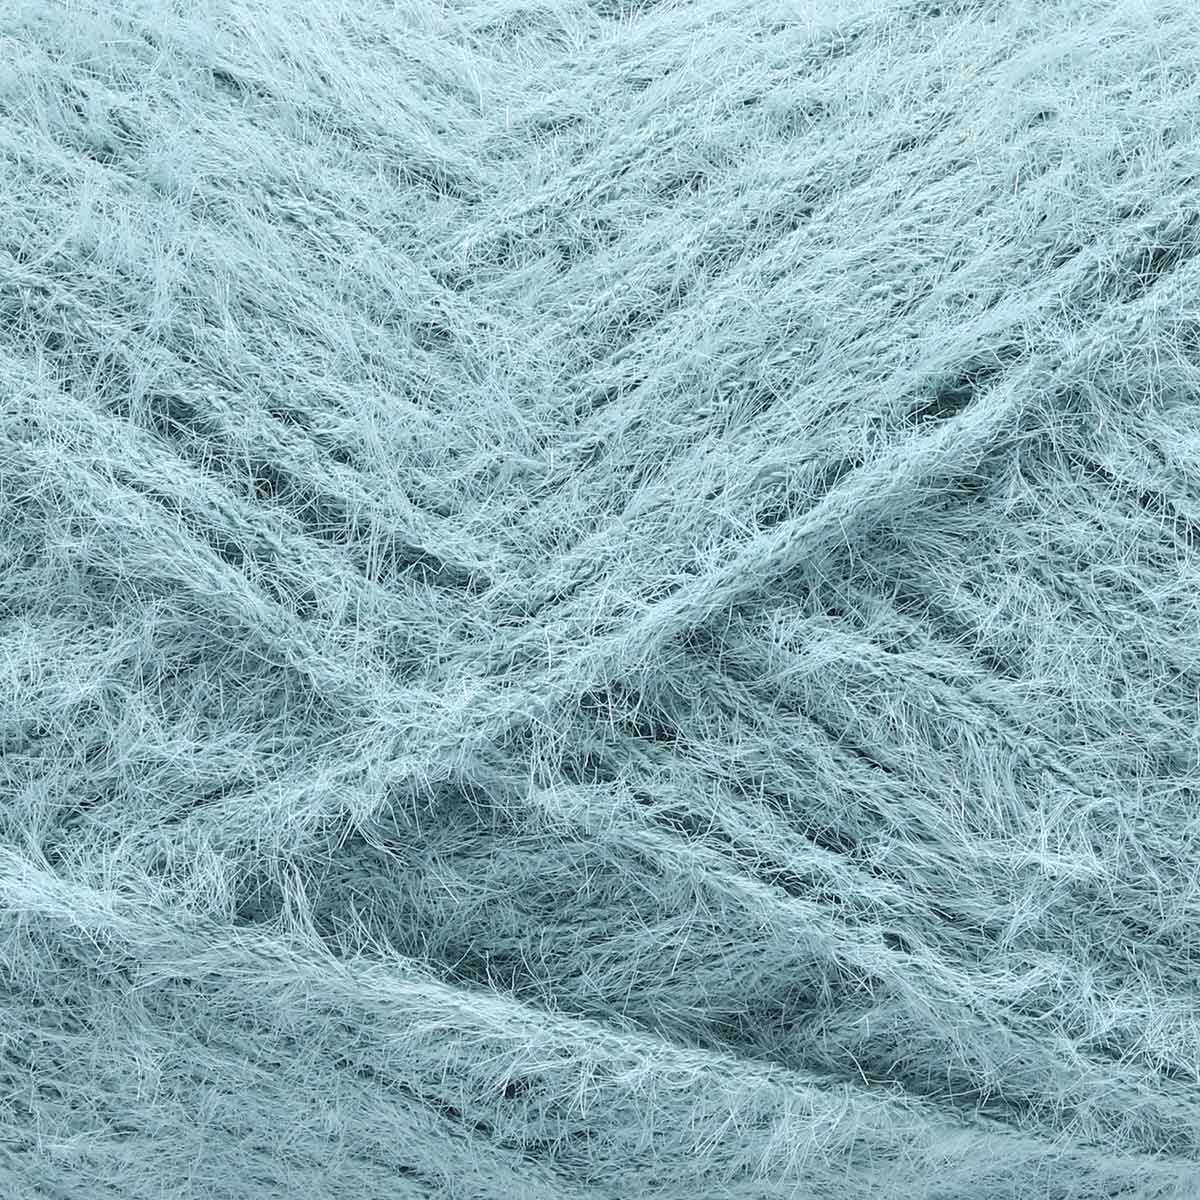 Пряжа для вязания Astra Premium киви фантазийная с выраженным ворсом киви нейлон 100 гр 200 м 01 голубой 3 мотка - фото 10